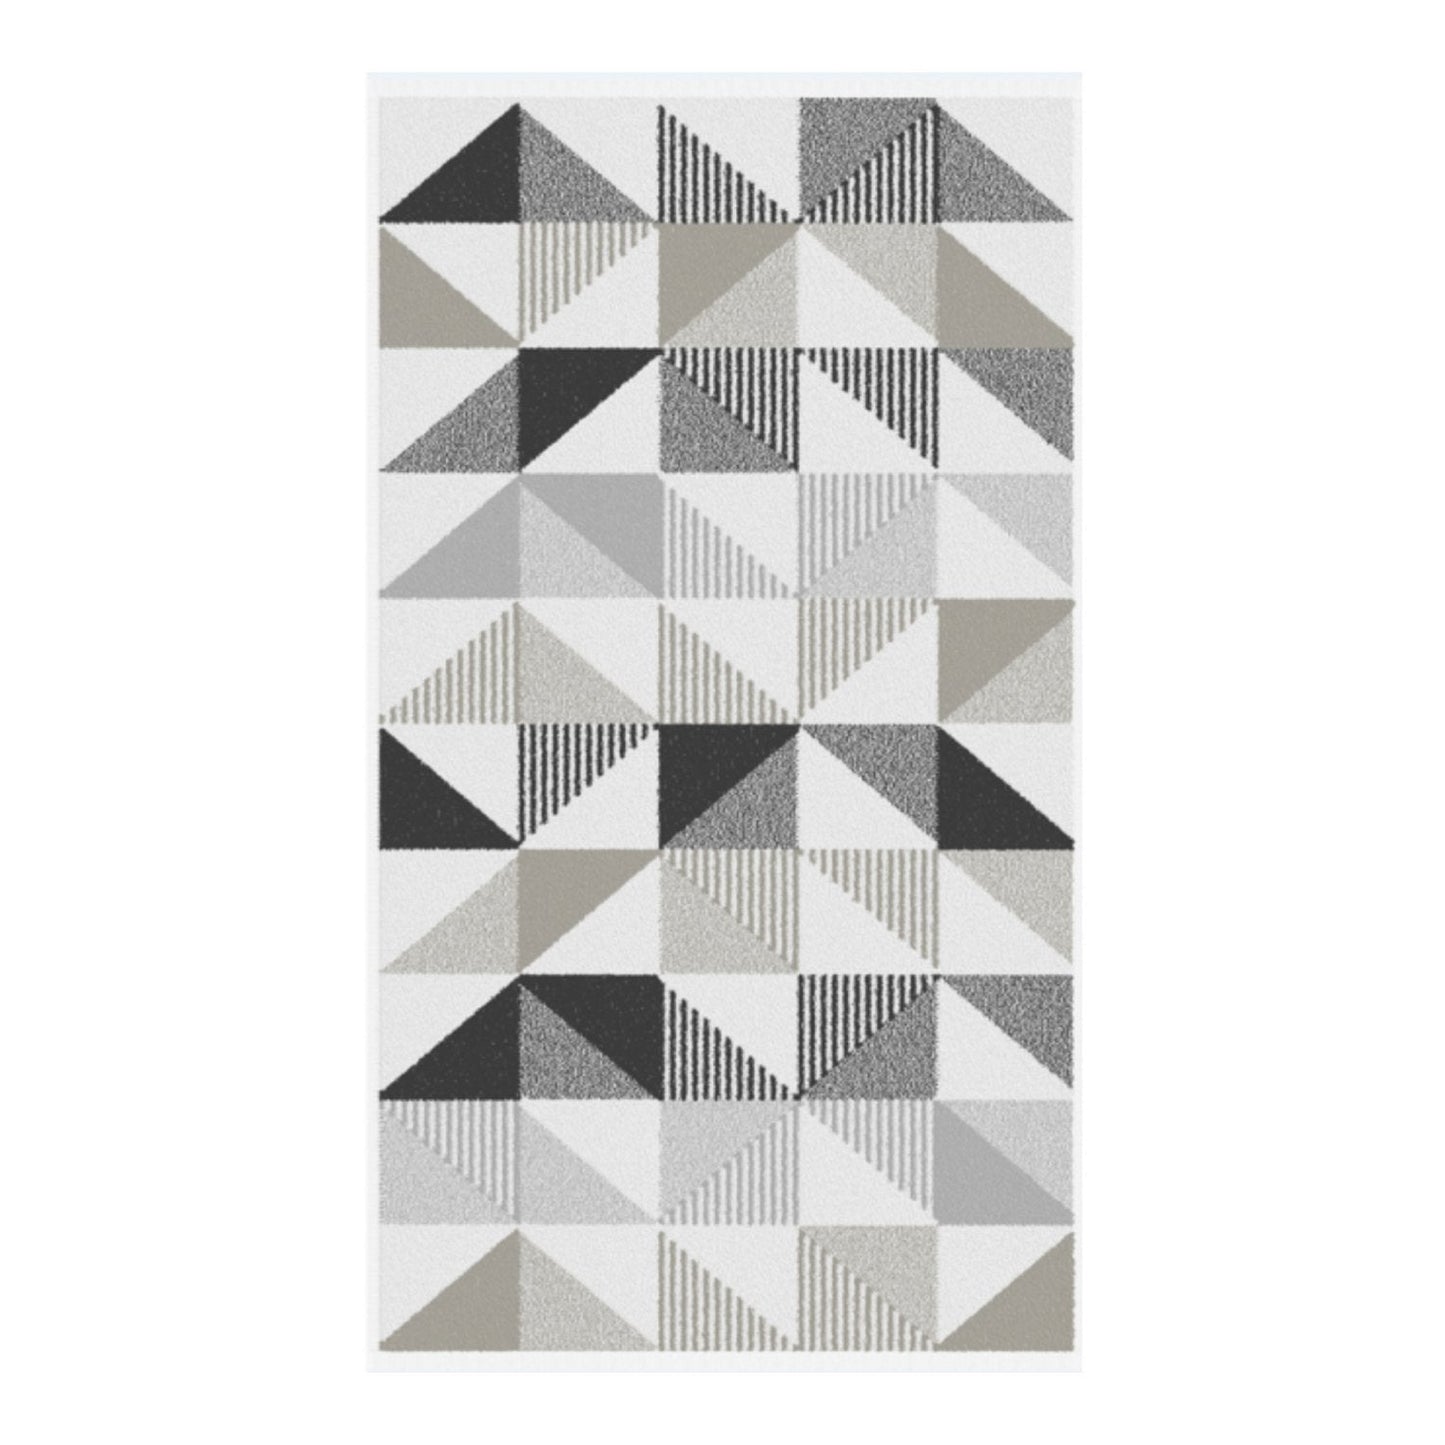 Hendra Monochrome Geometric 550gsm Cotton Towels